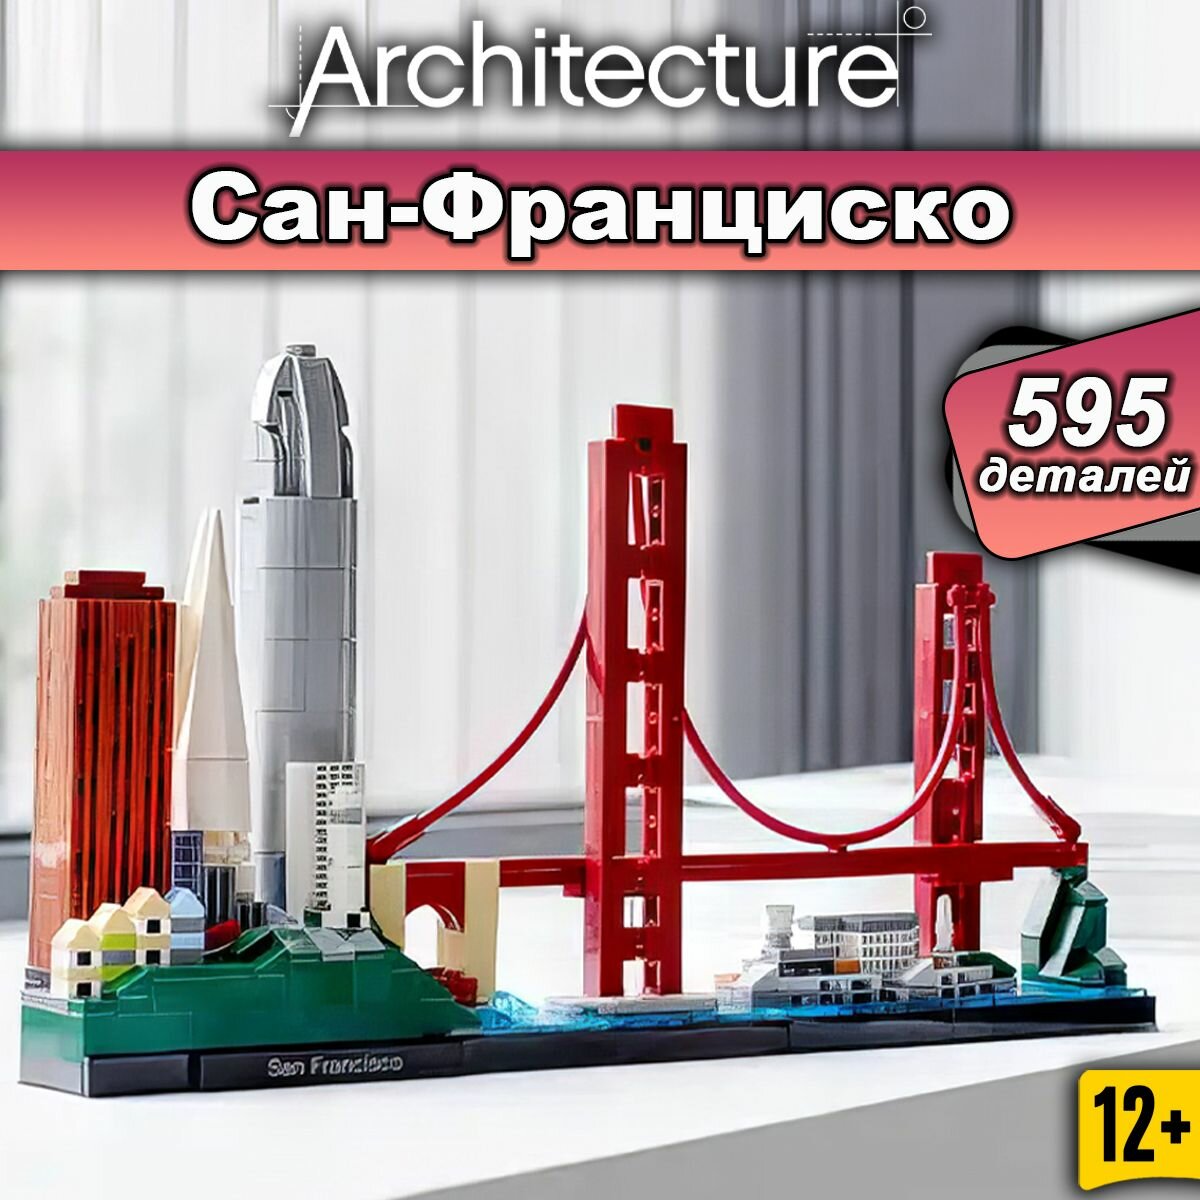 Конструктор Architecture Сан-Франциско, 595 деталей, Архитектура Creator